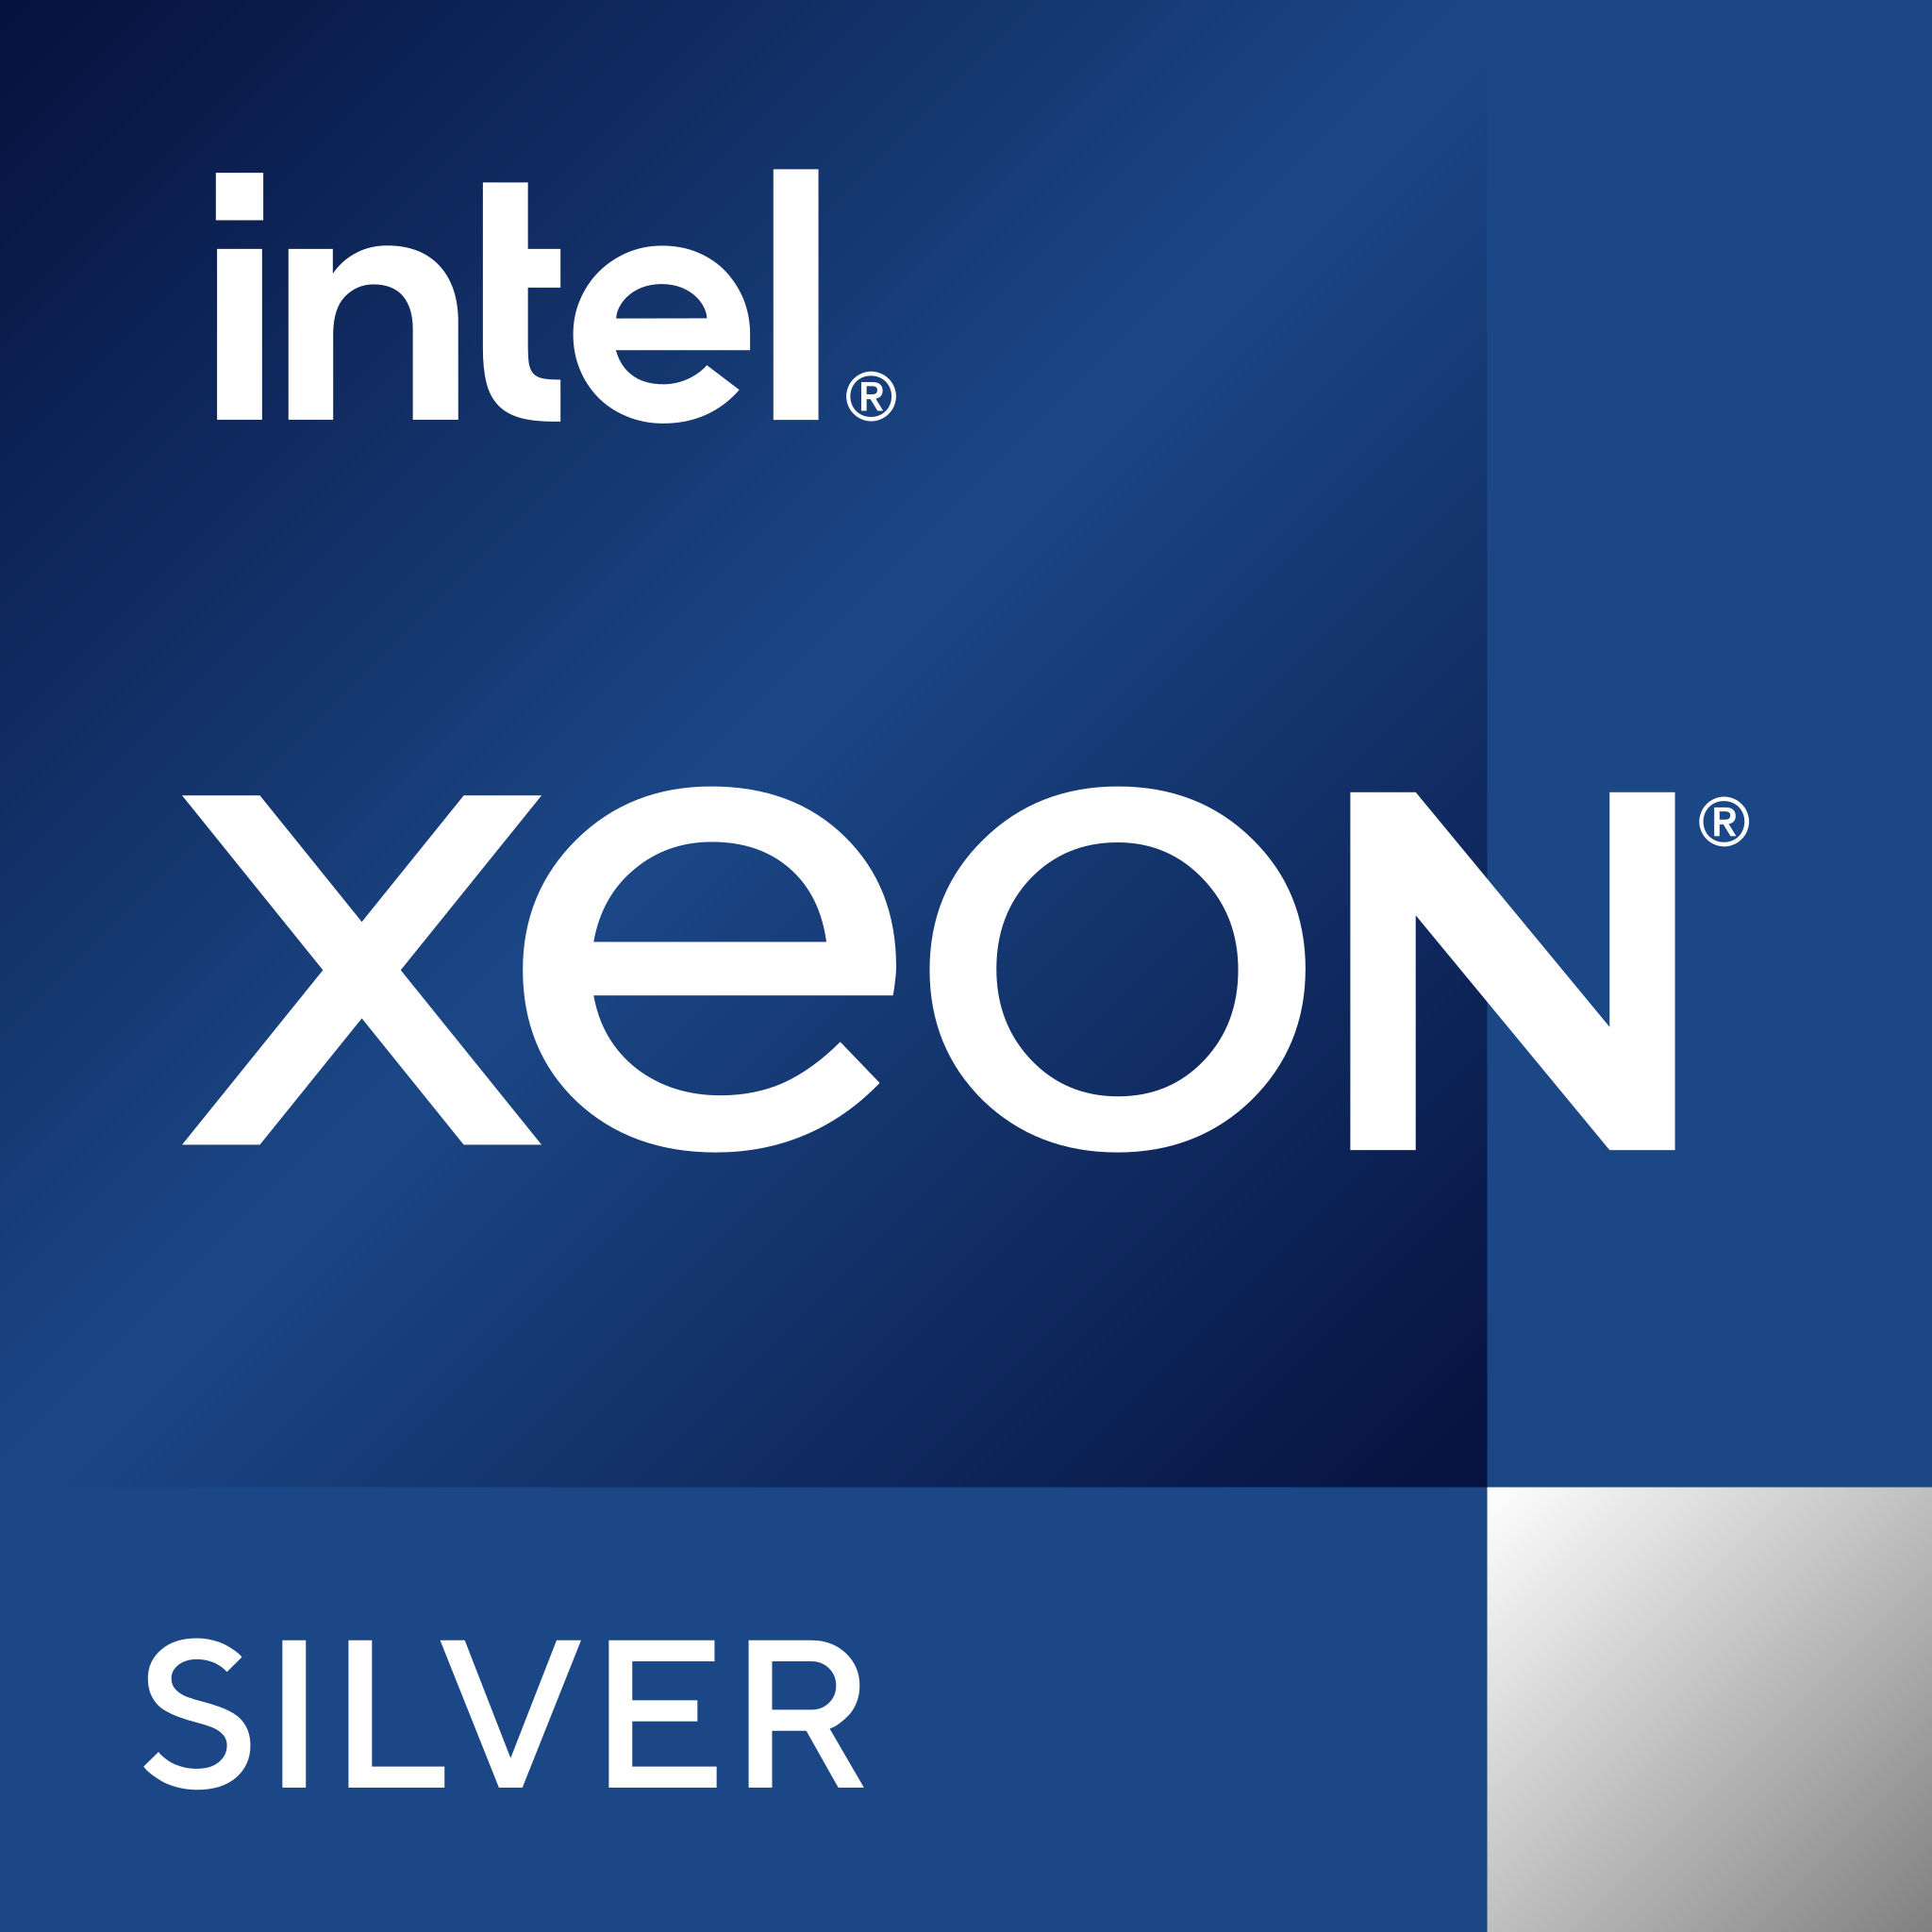 File:Intel Xeon Silver 2020 logo.svg - Wikimedia Commons